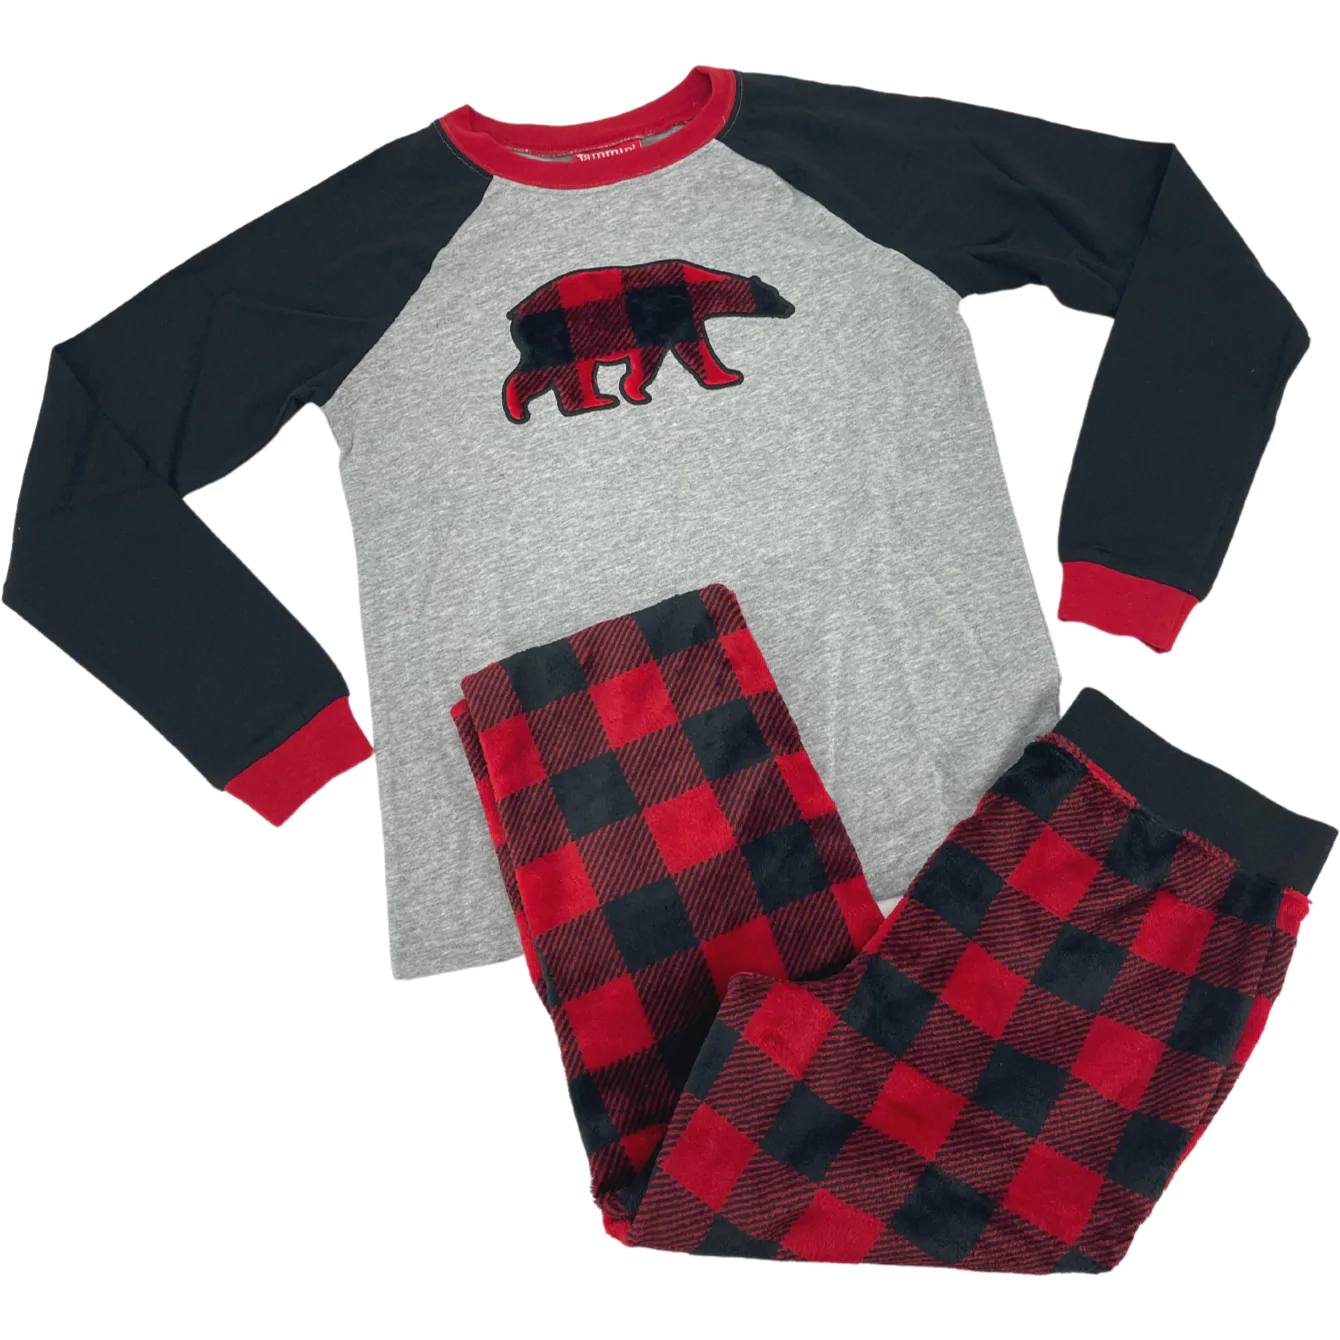 Jammin' Jammies Children's Pyjama Set / Red & Black Plaid / Size Large